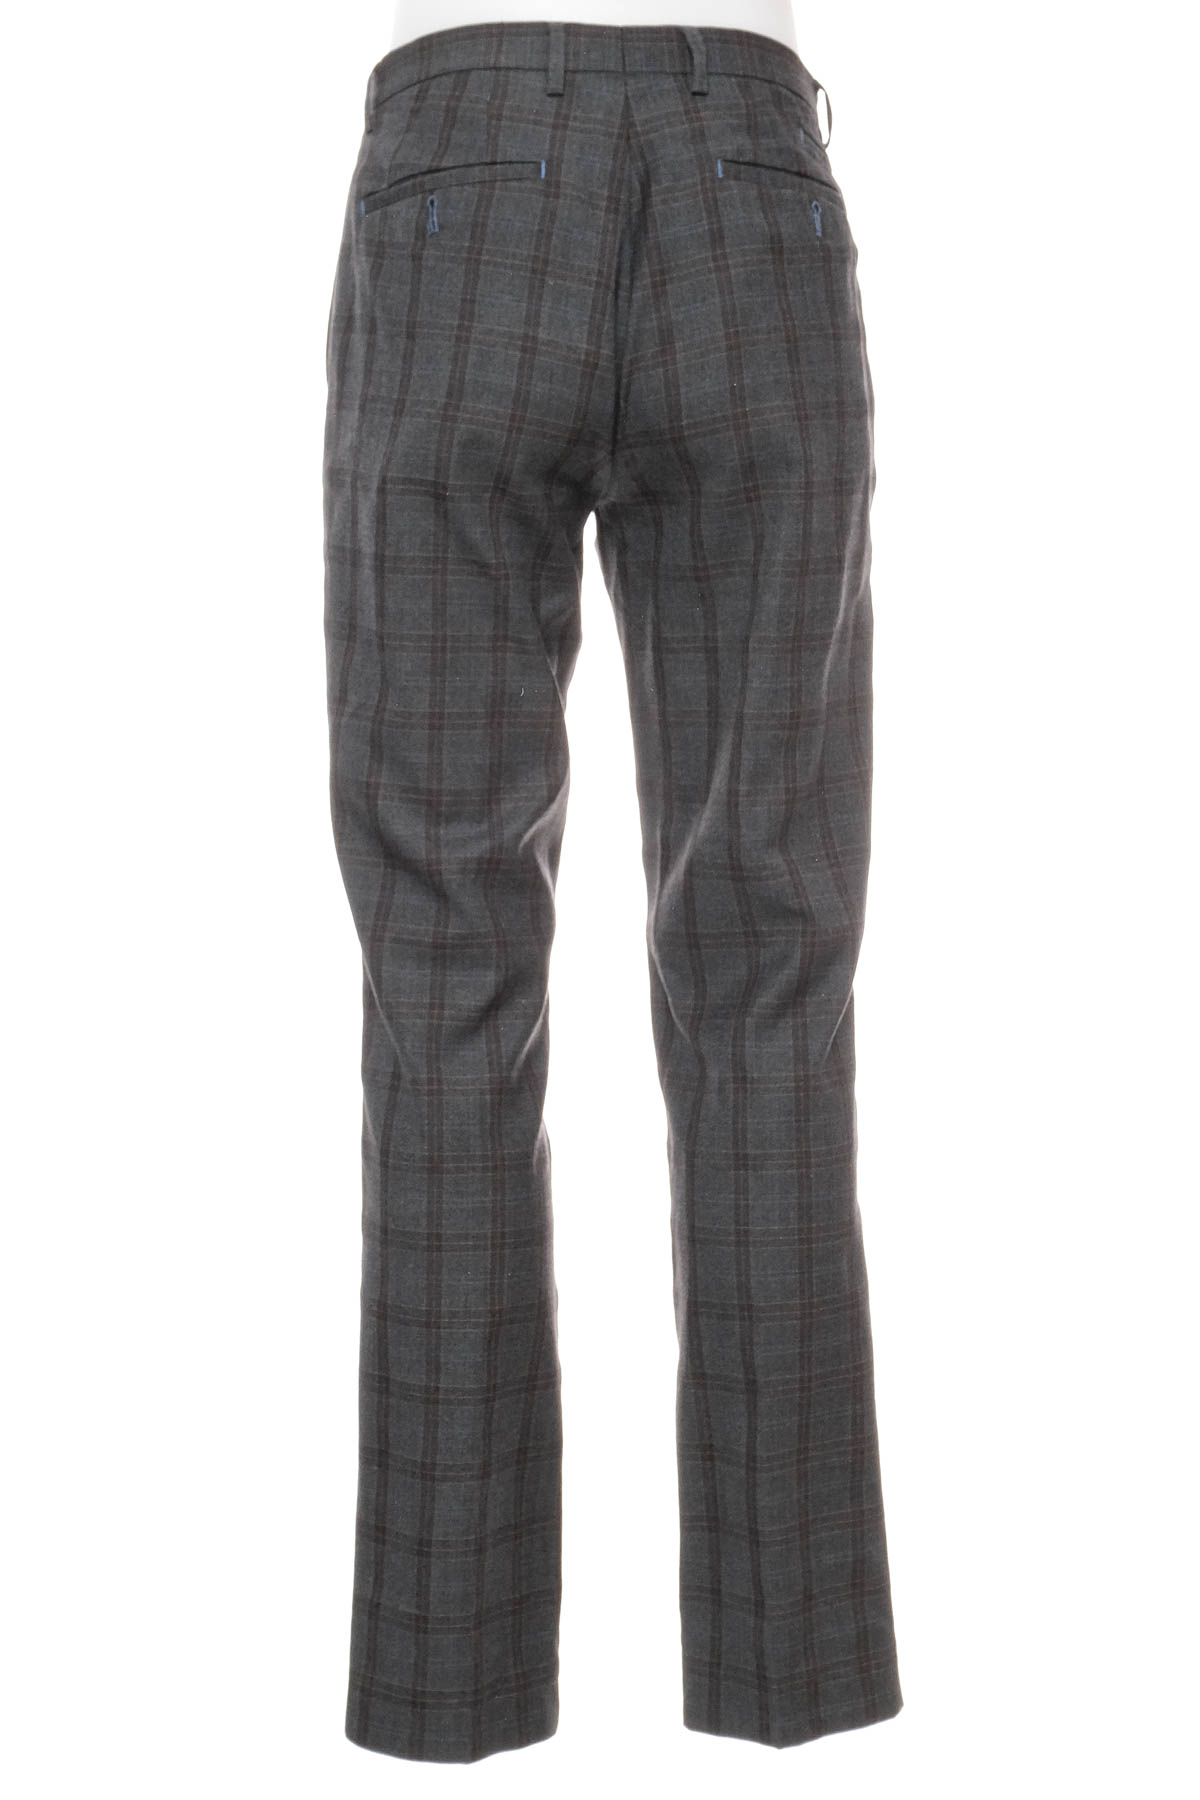 Men's trousers - Burton - 1